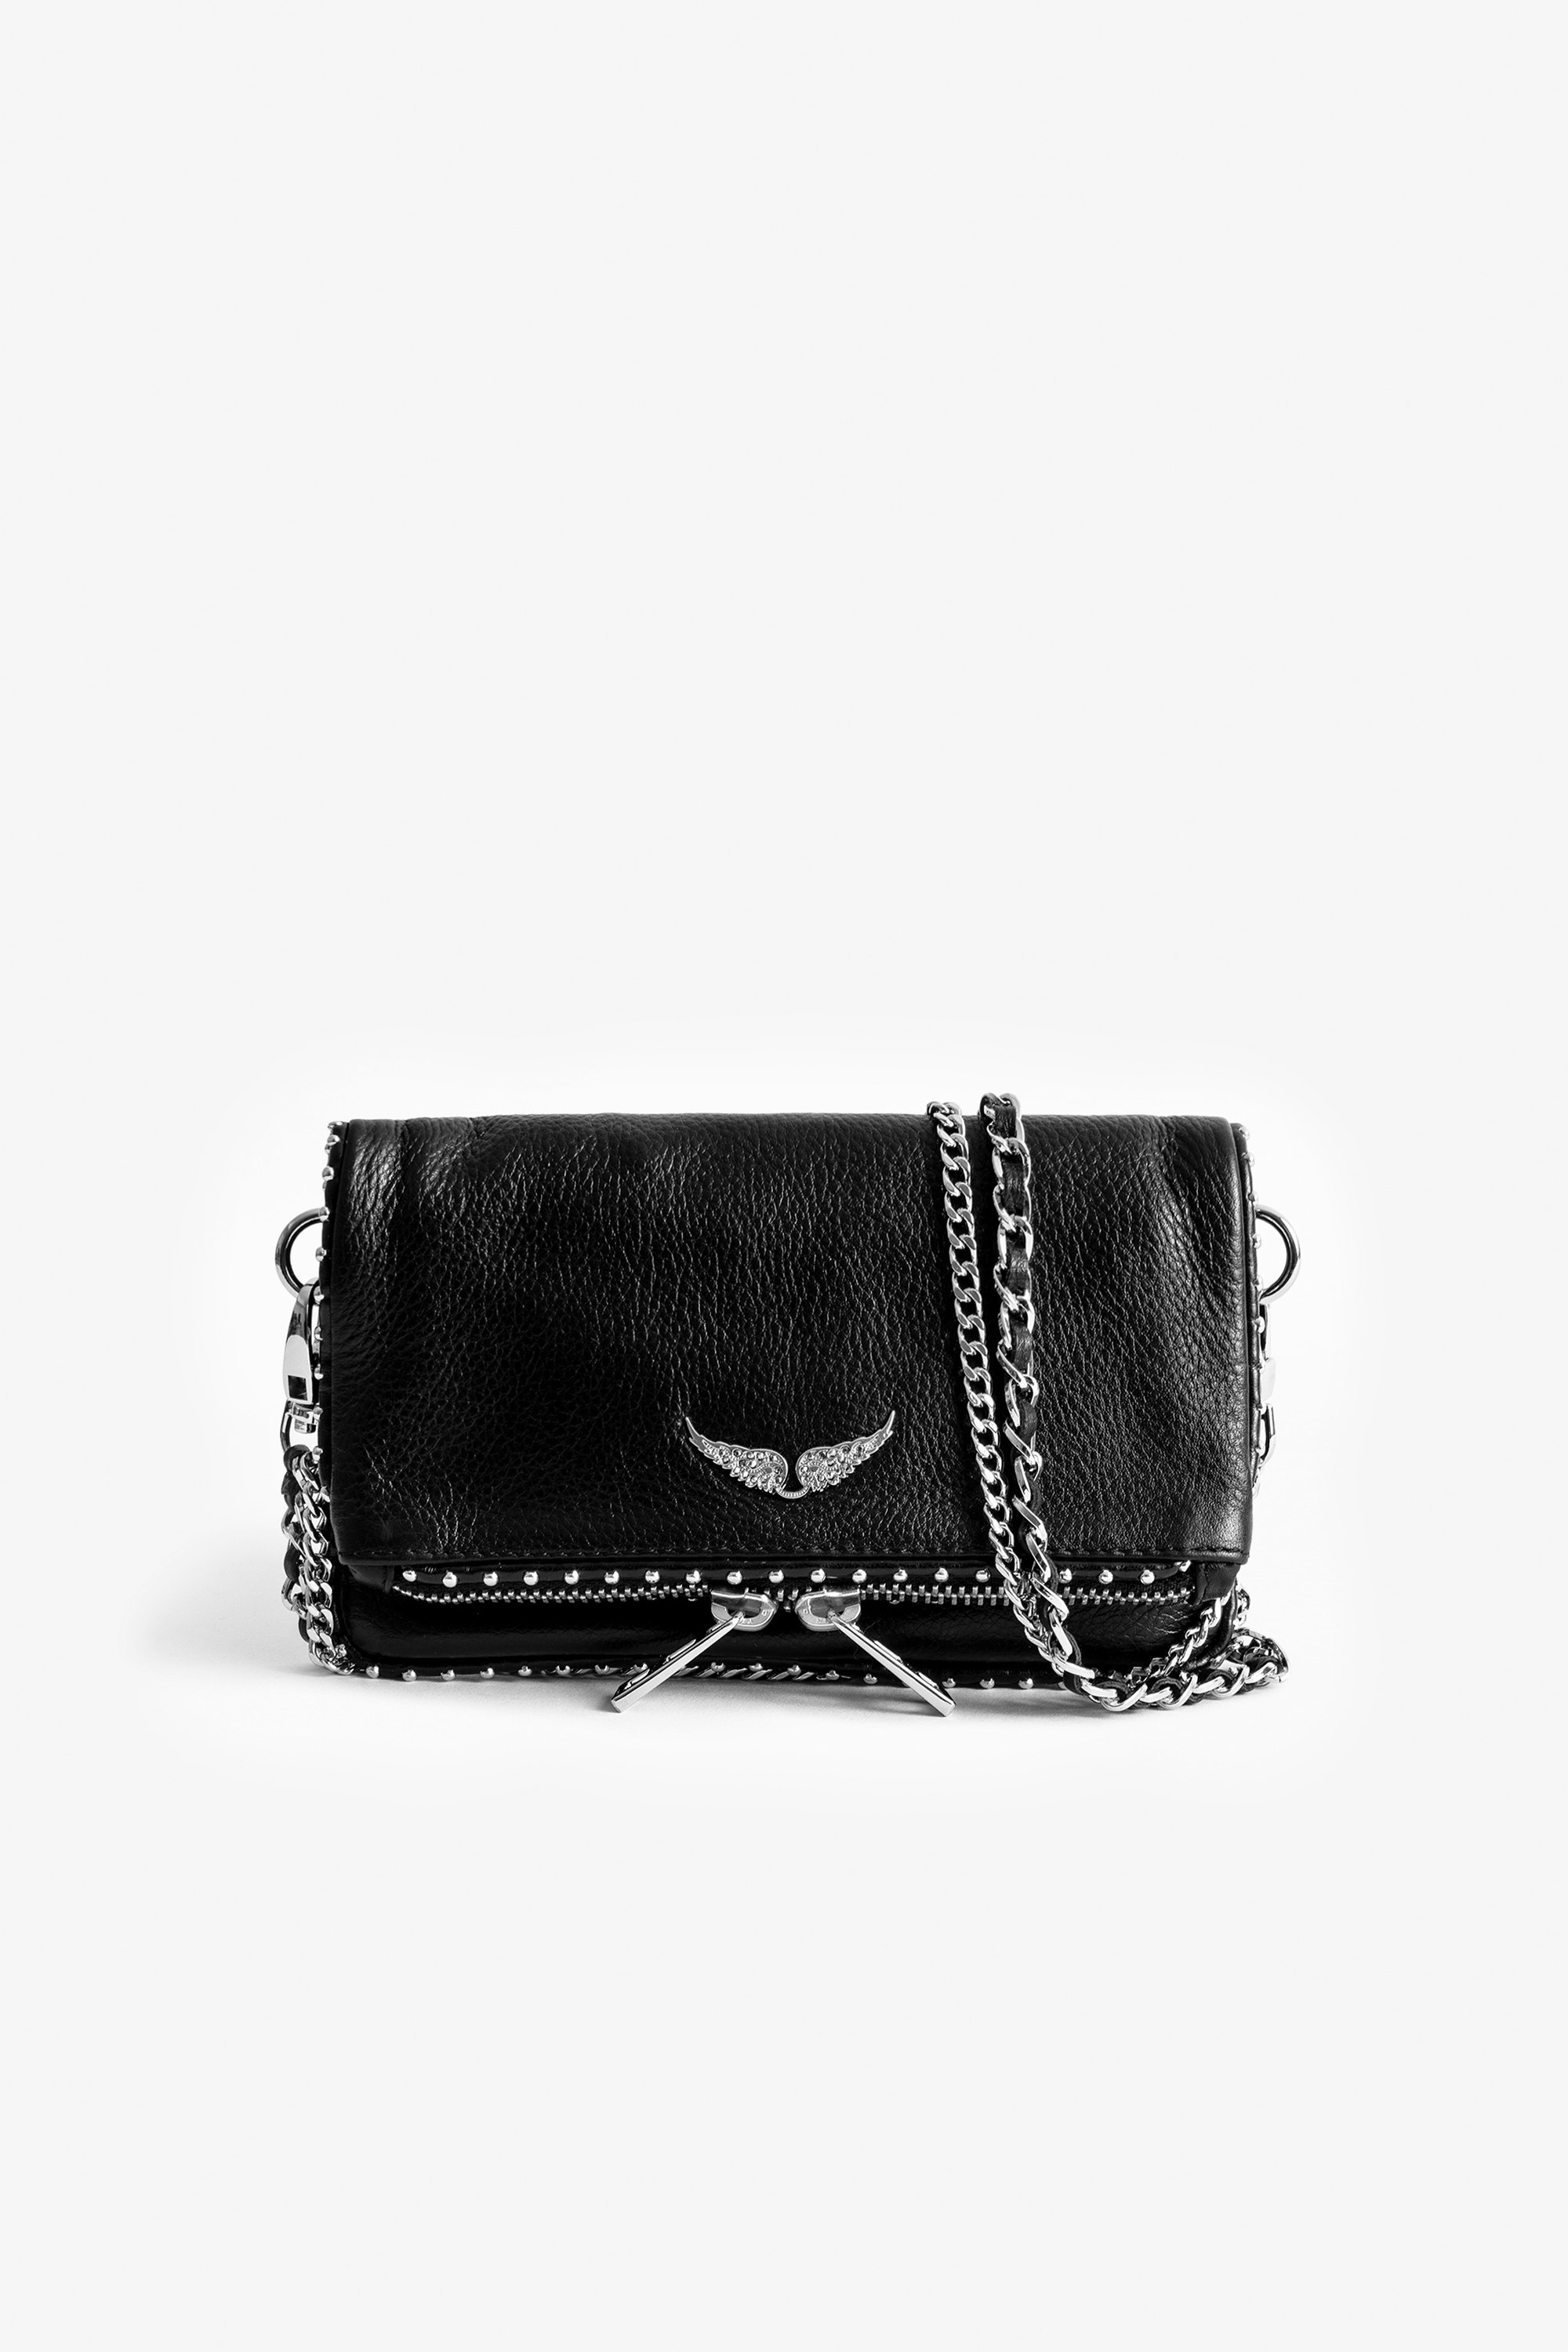 Rock Nano Studs Clutch - Women's black mini clutch in leather, embellished with studs.